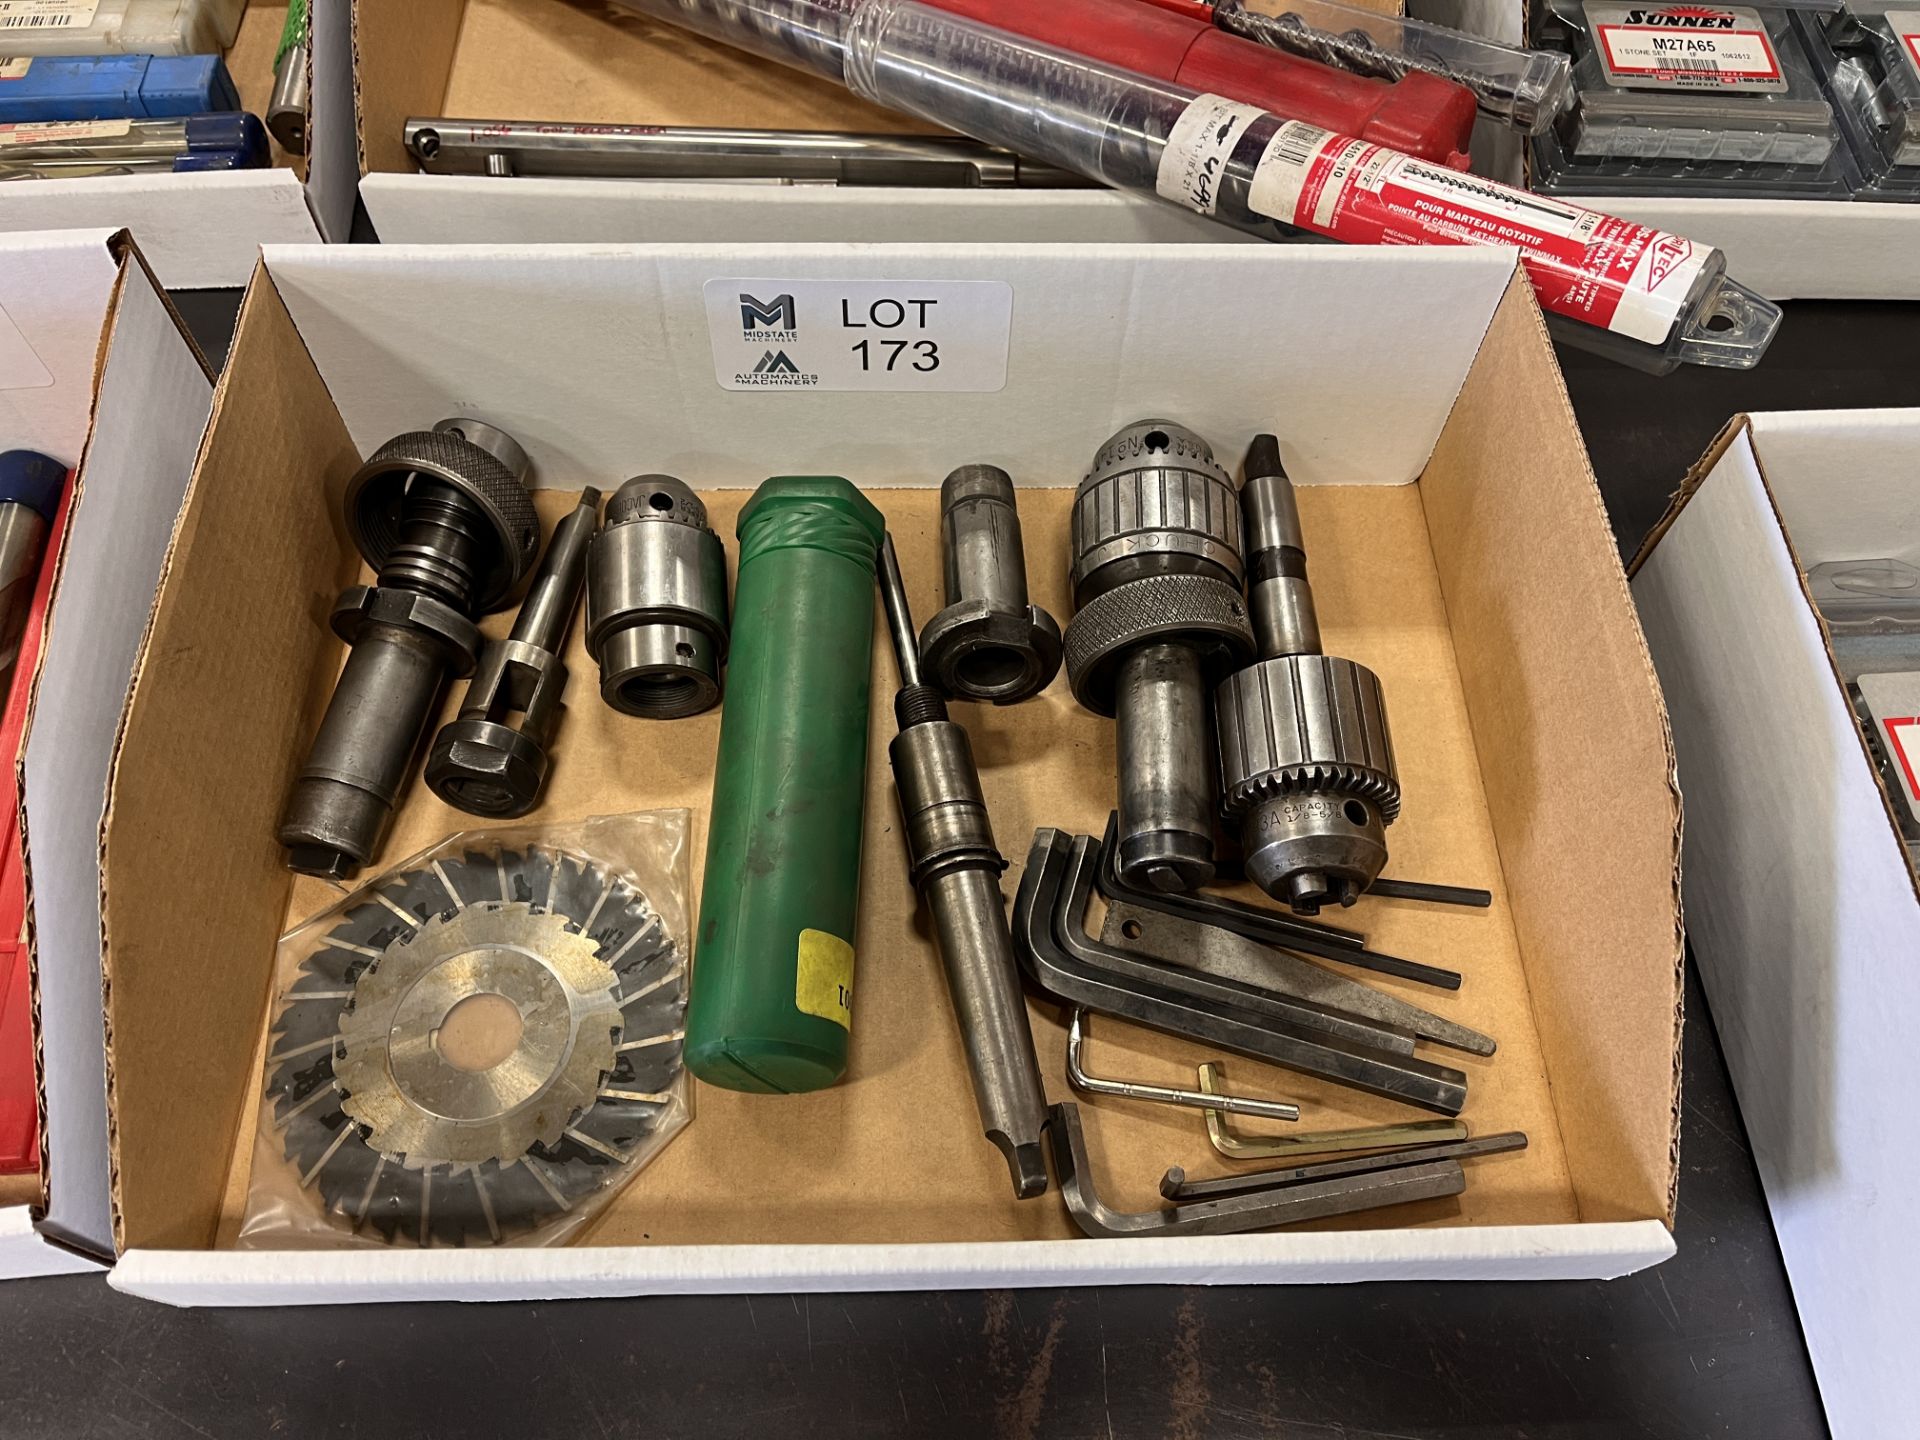 Misc Chucks and tools